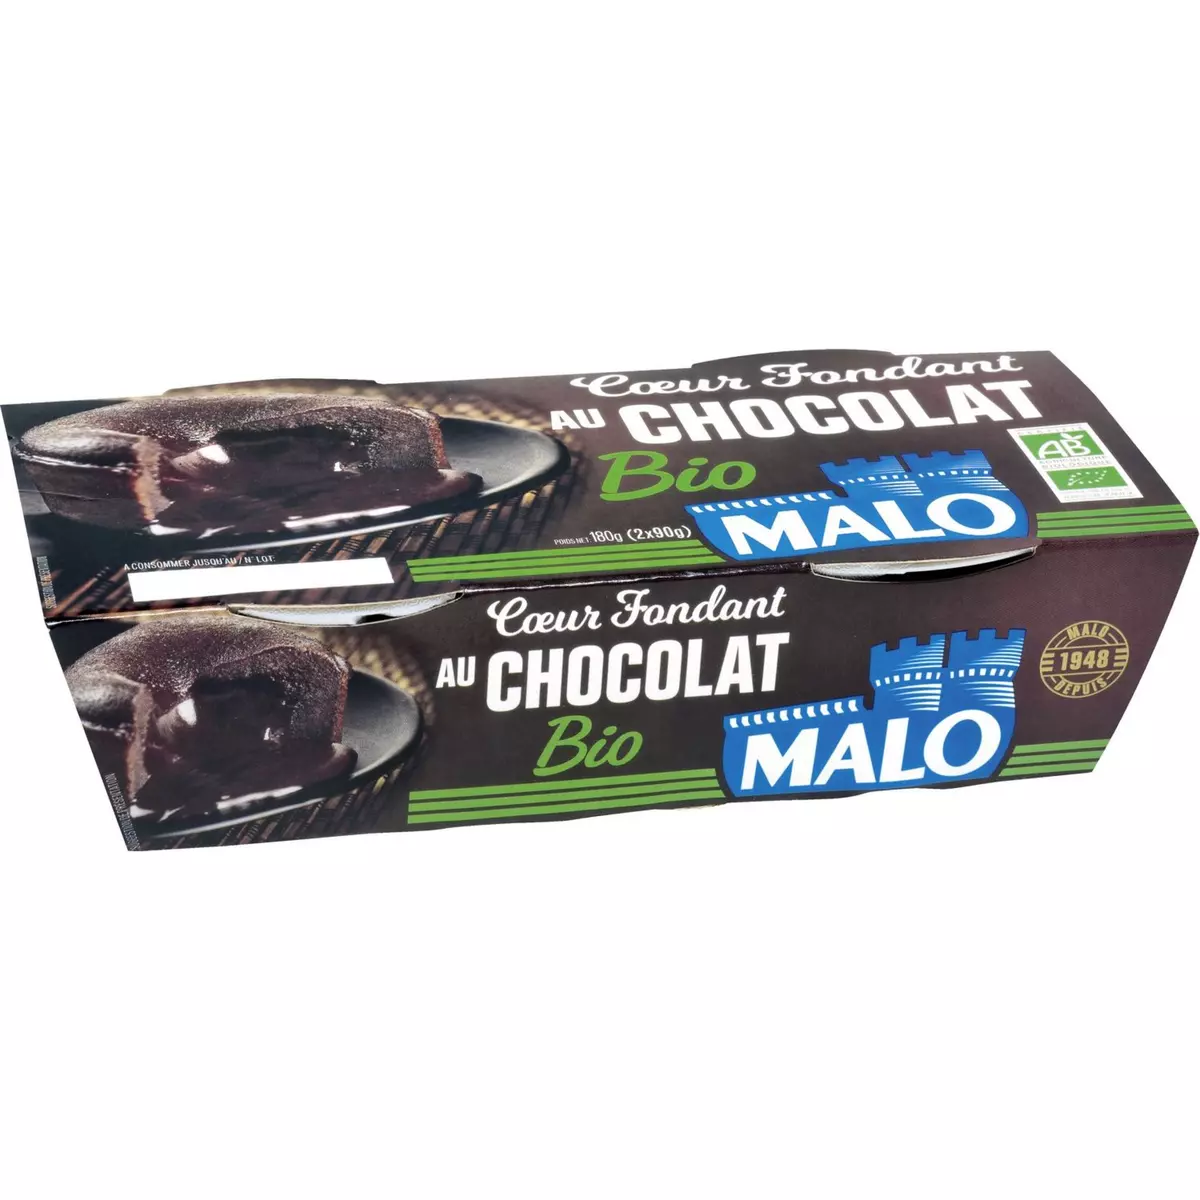 MALO Dessert fondant au chocolat bio 2x90g